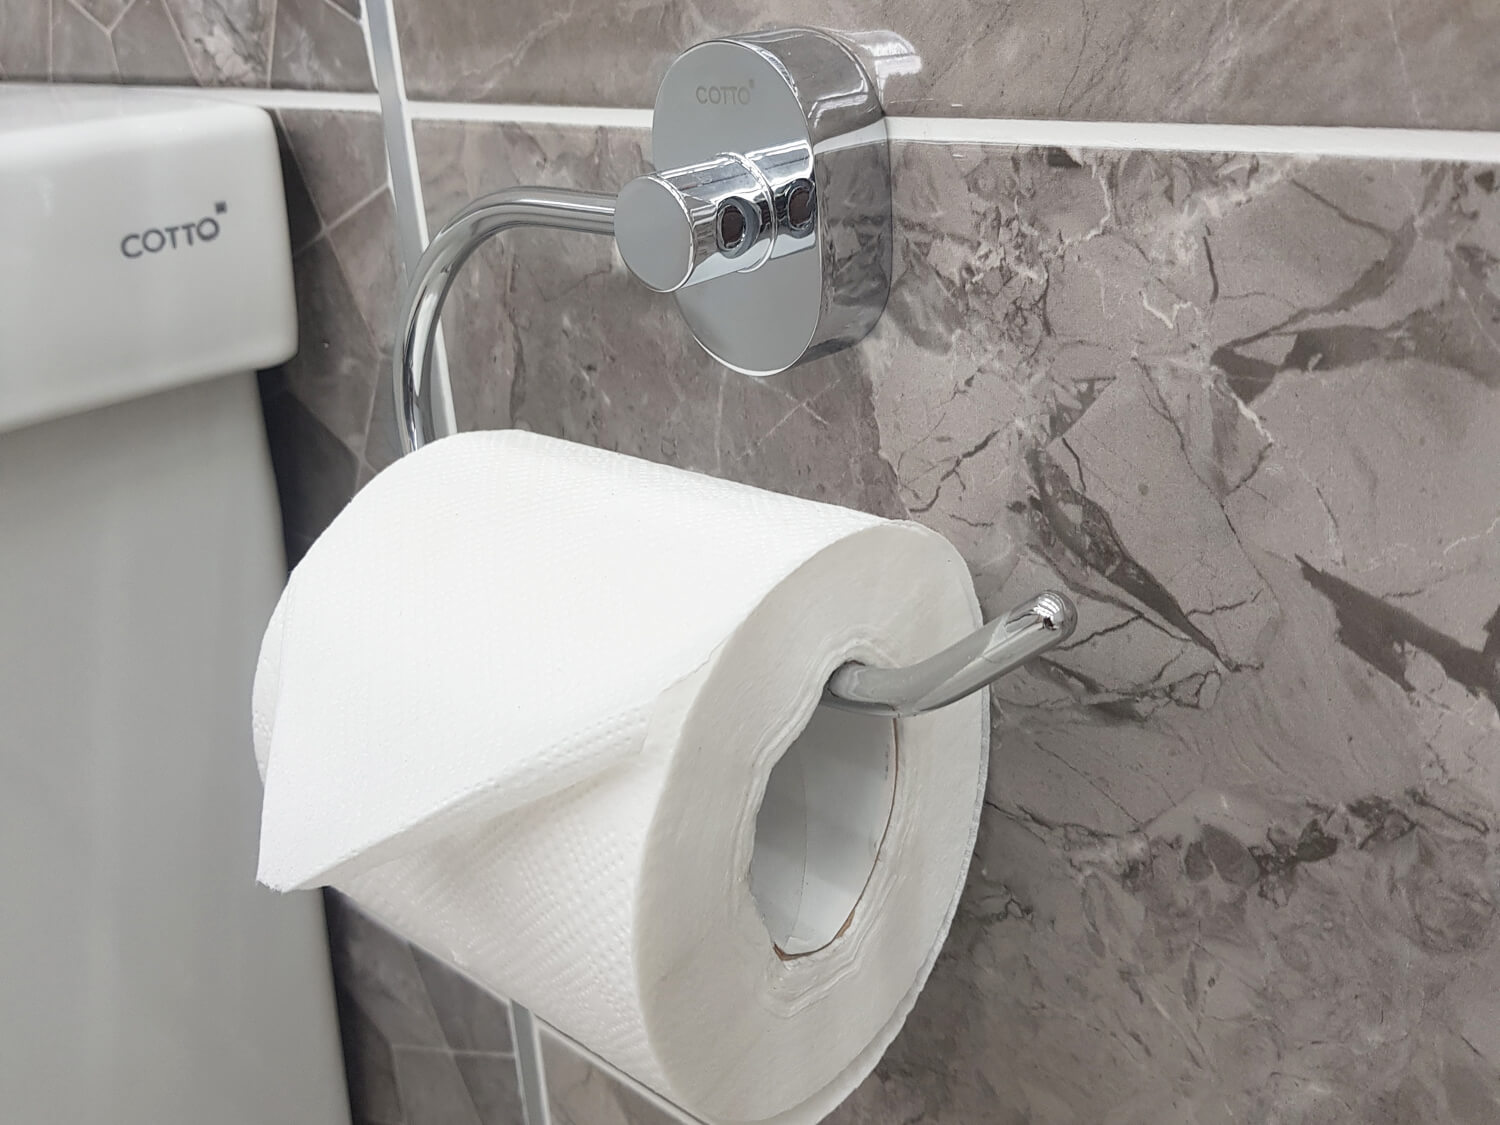 COTTO Como Chrome Toilet Paper Holder